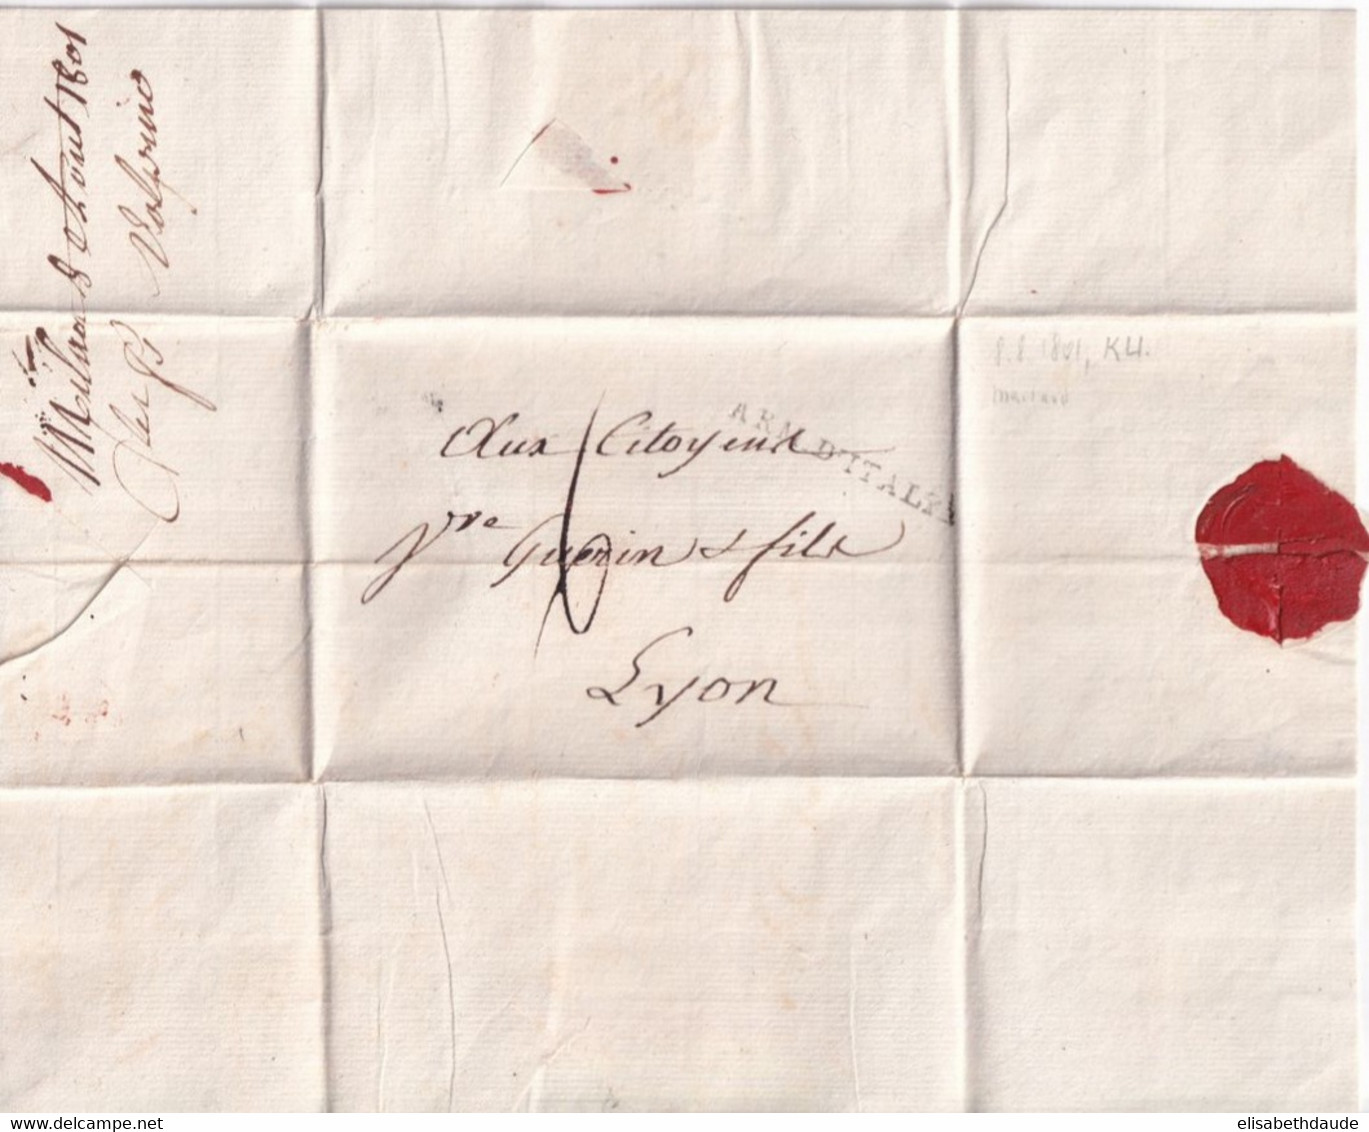 1801 - ARMEE D'ITALIE 42mm (COTE = 180 EUR) - LETTRE De MILAN => LYON - Army Postmarks (before 1900)